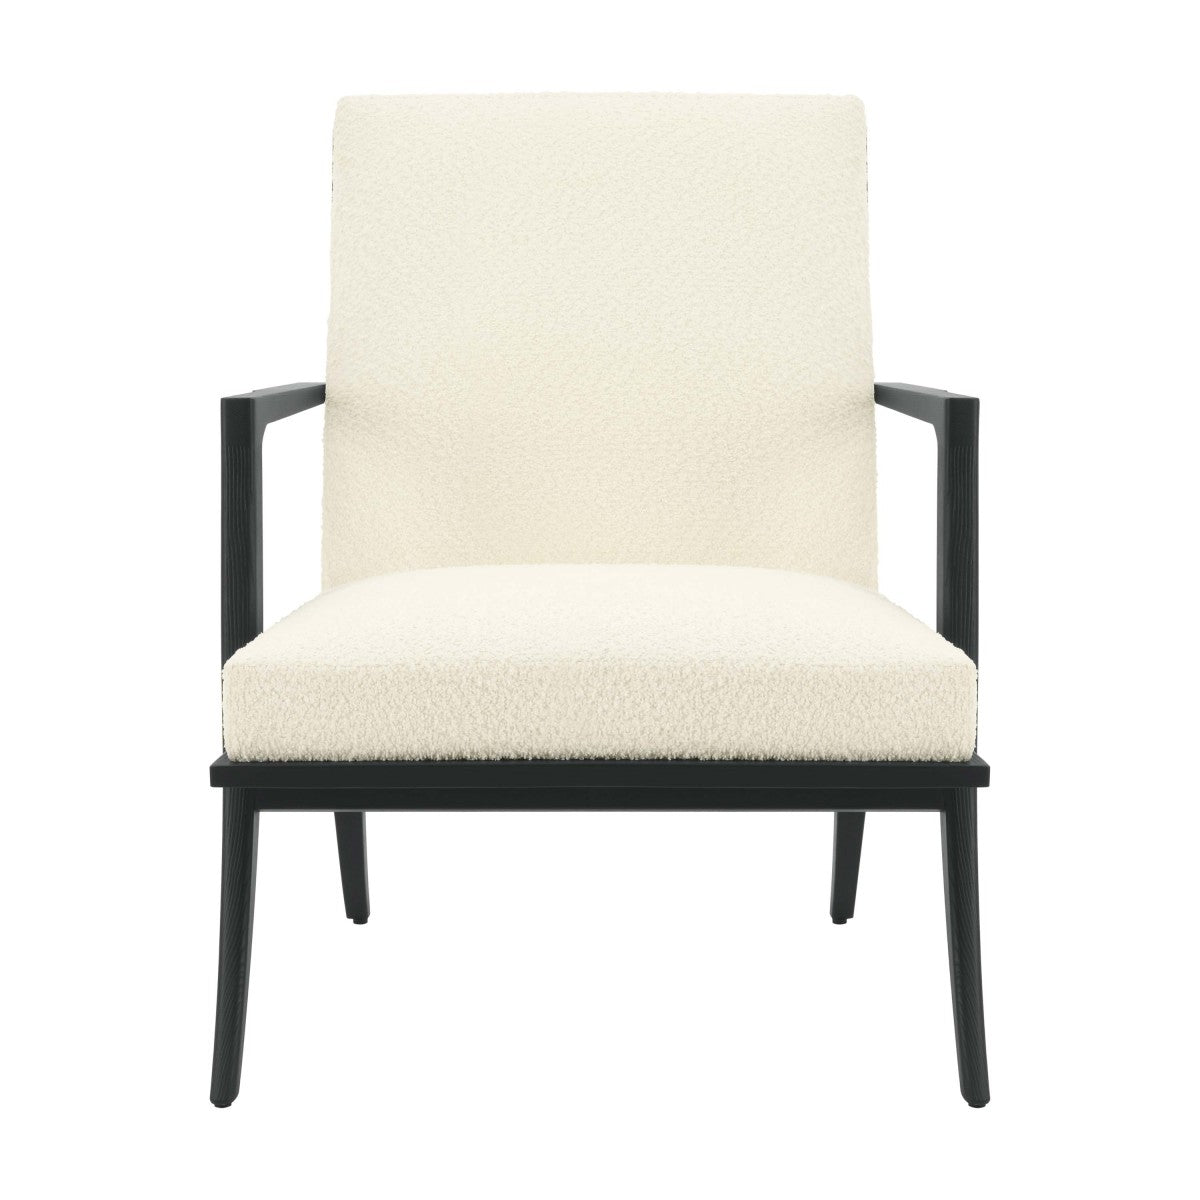 Noka Bespoke Upholstered Mid Century Modern Contemporary Armchair MSB1P Custom Made To Order